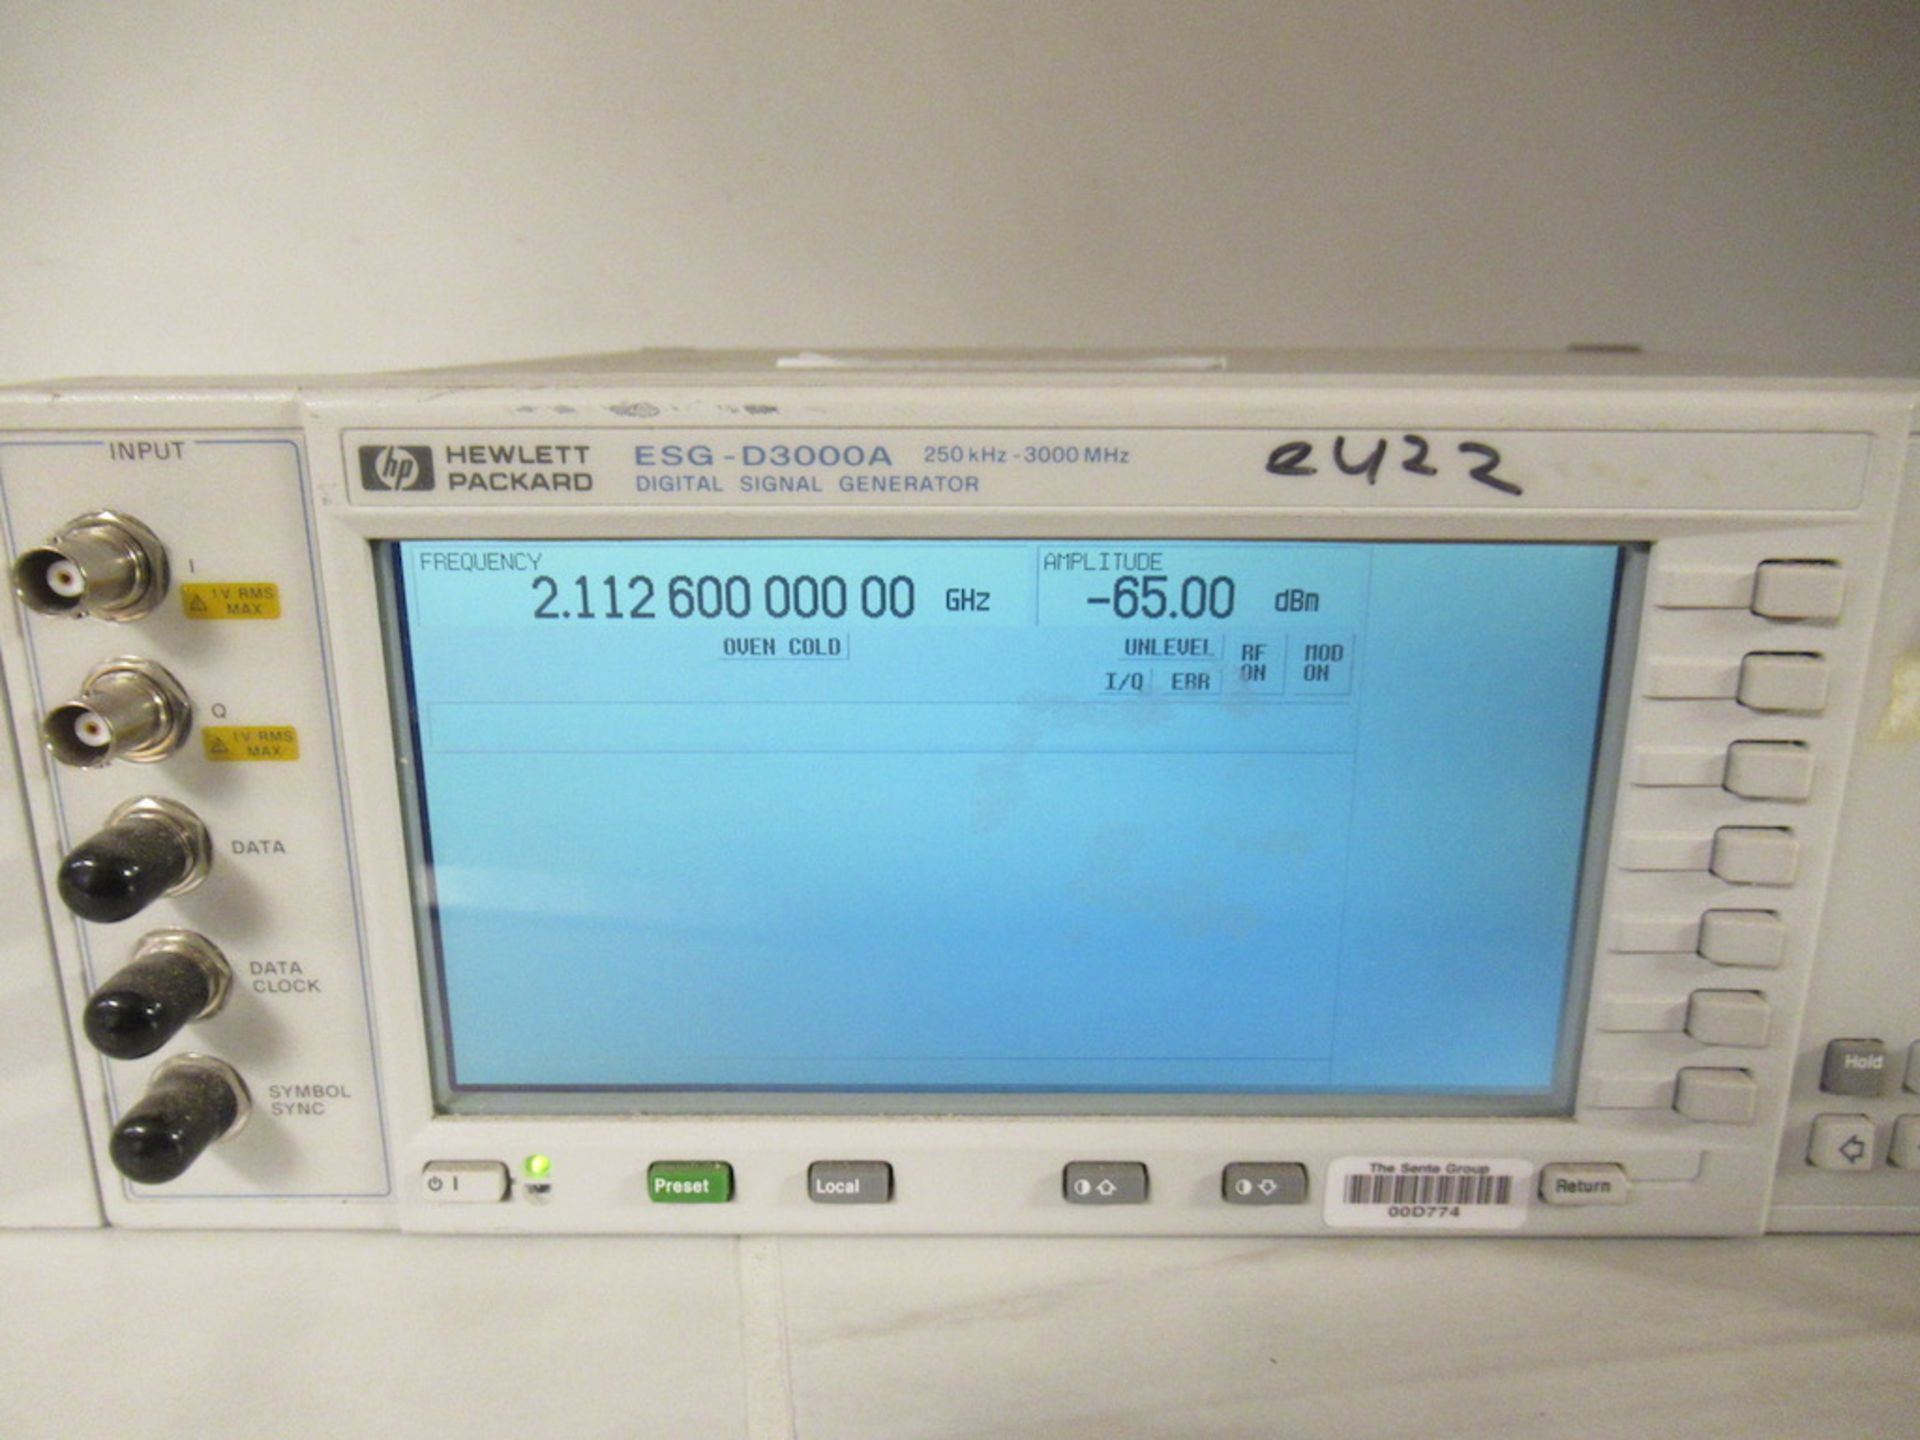 Hewlett Packard Esg-D3000A Digital Signal Generator, 250Khz-3000 Mhz powers on